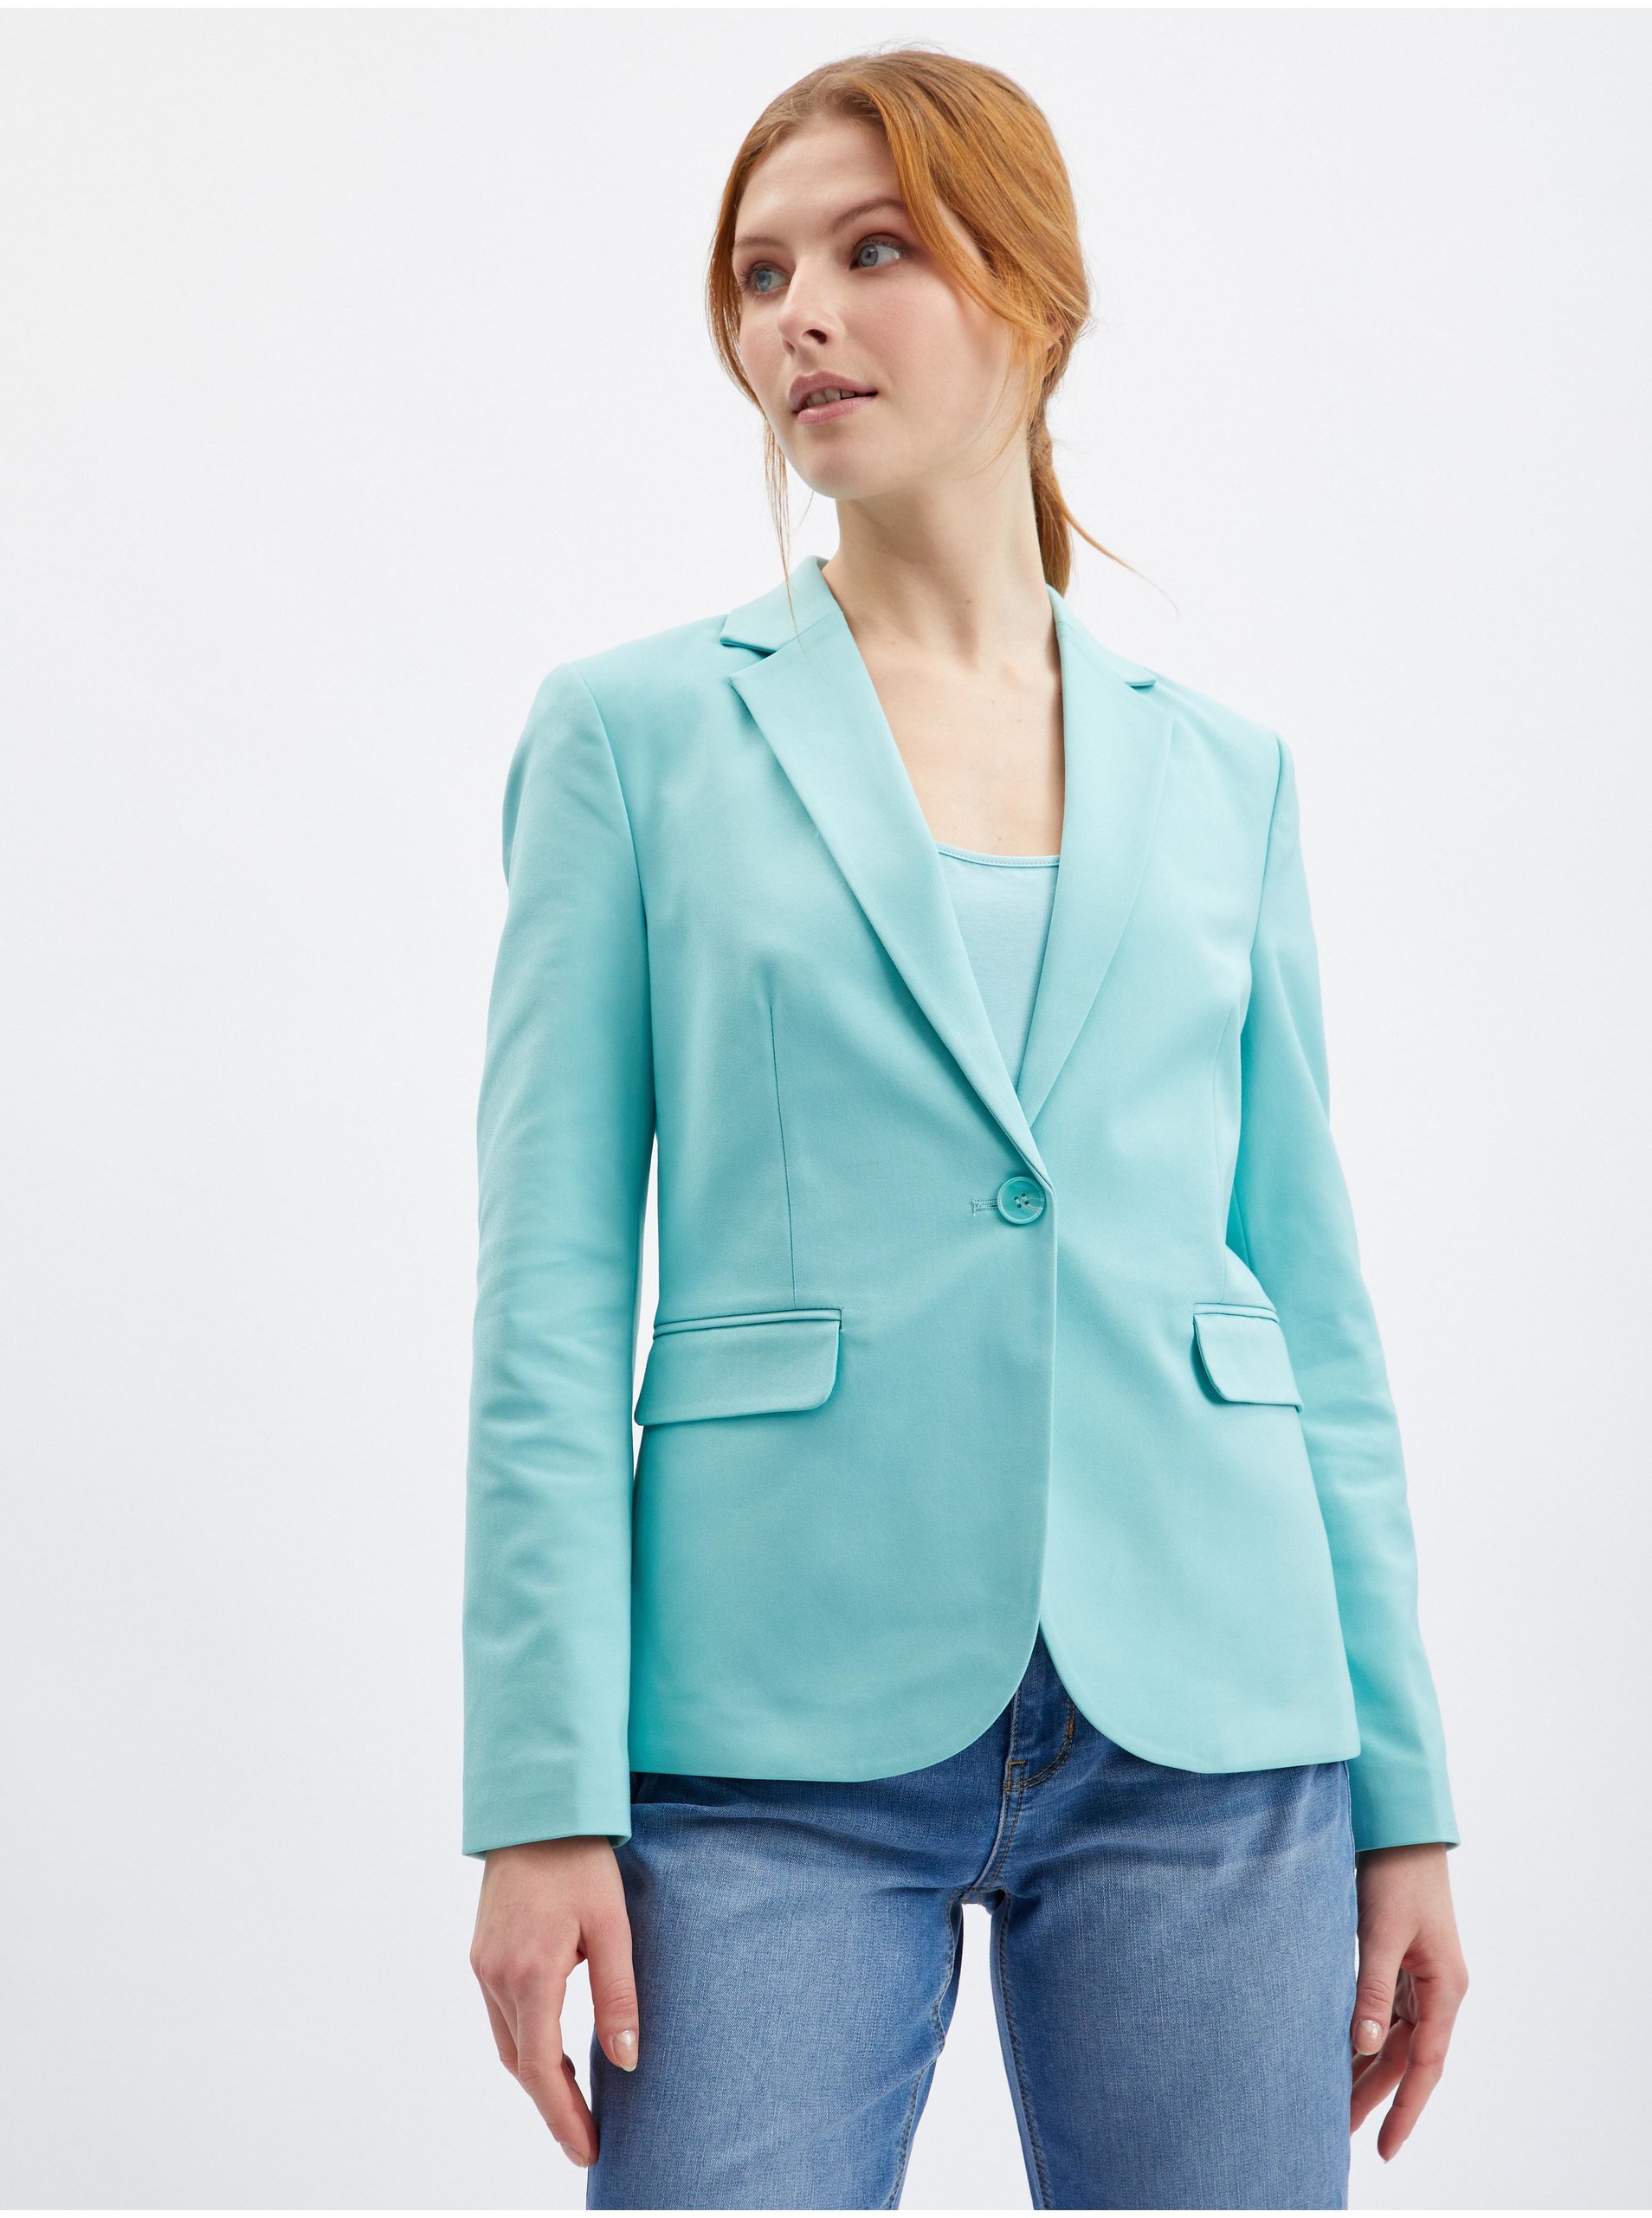 Orsay Turquoise Ladies Jacket - Women